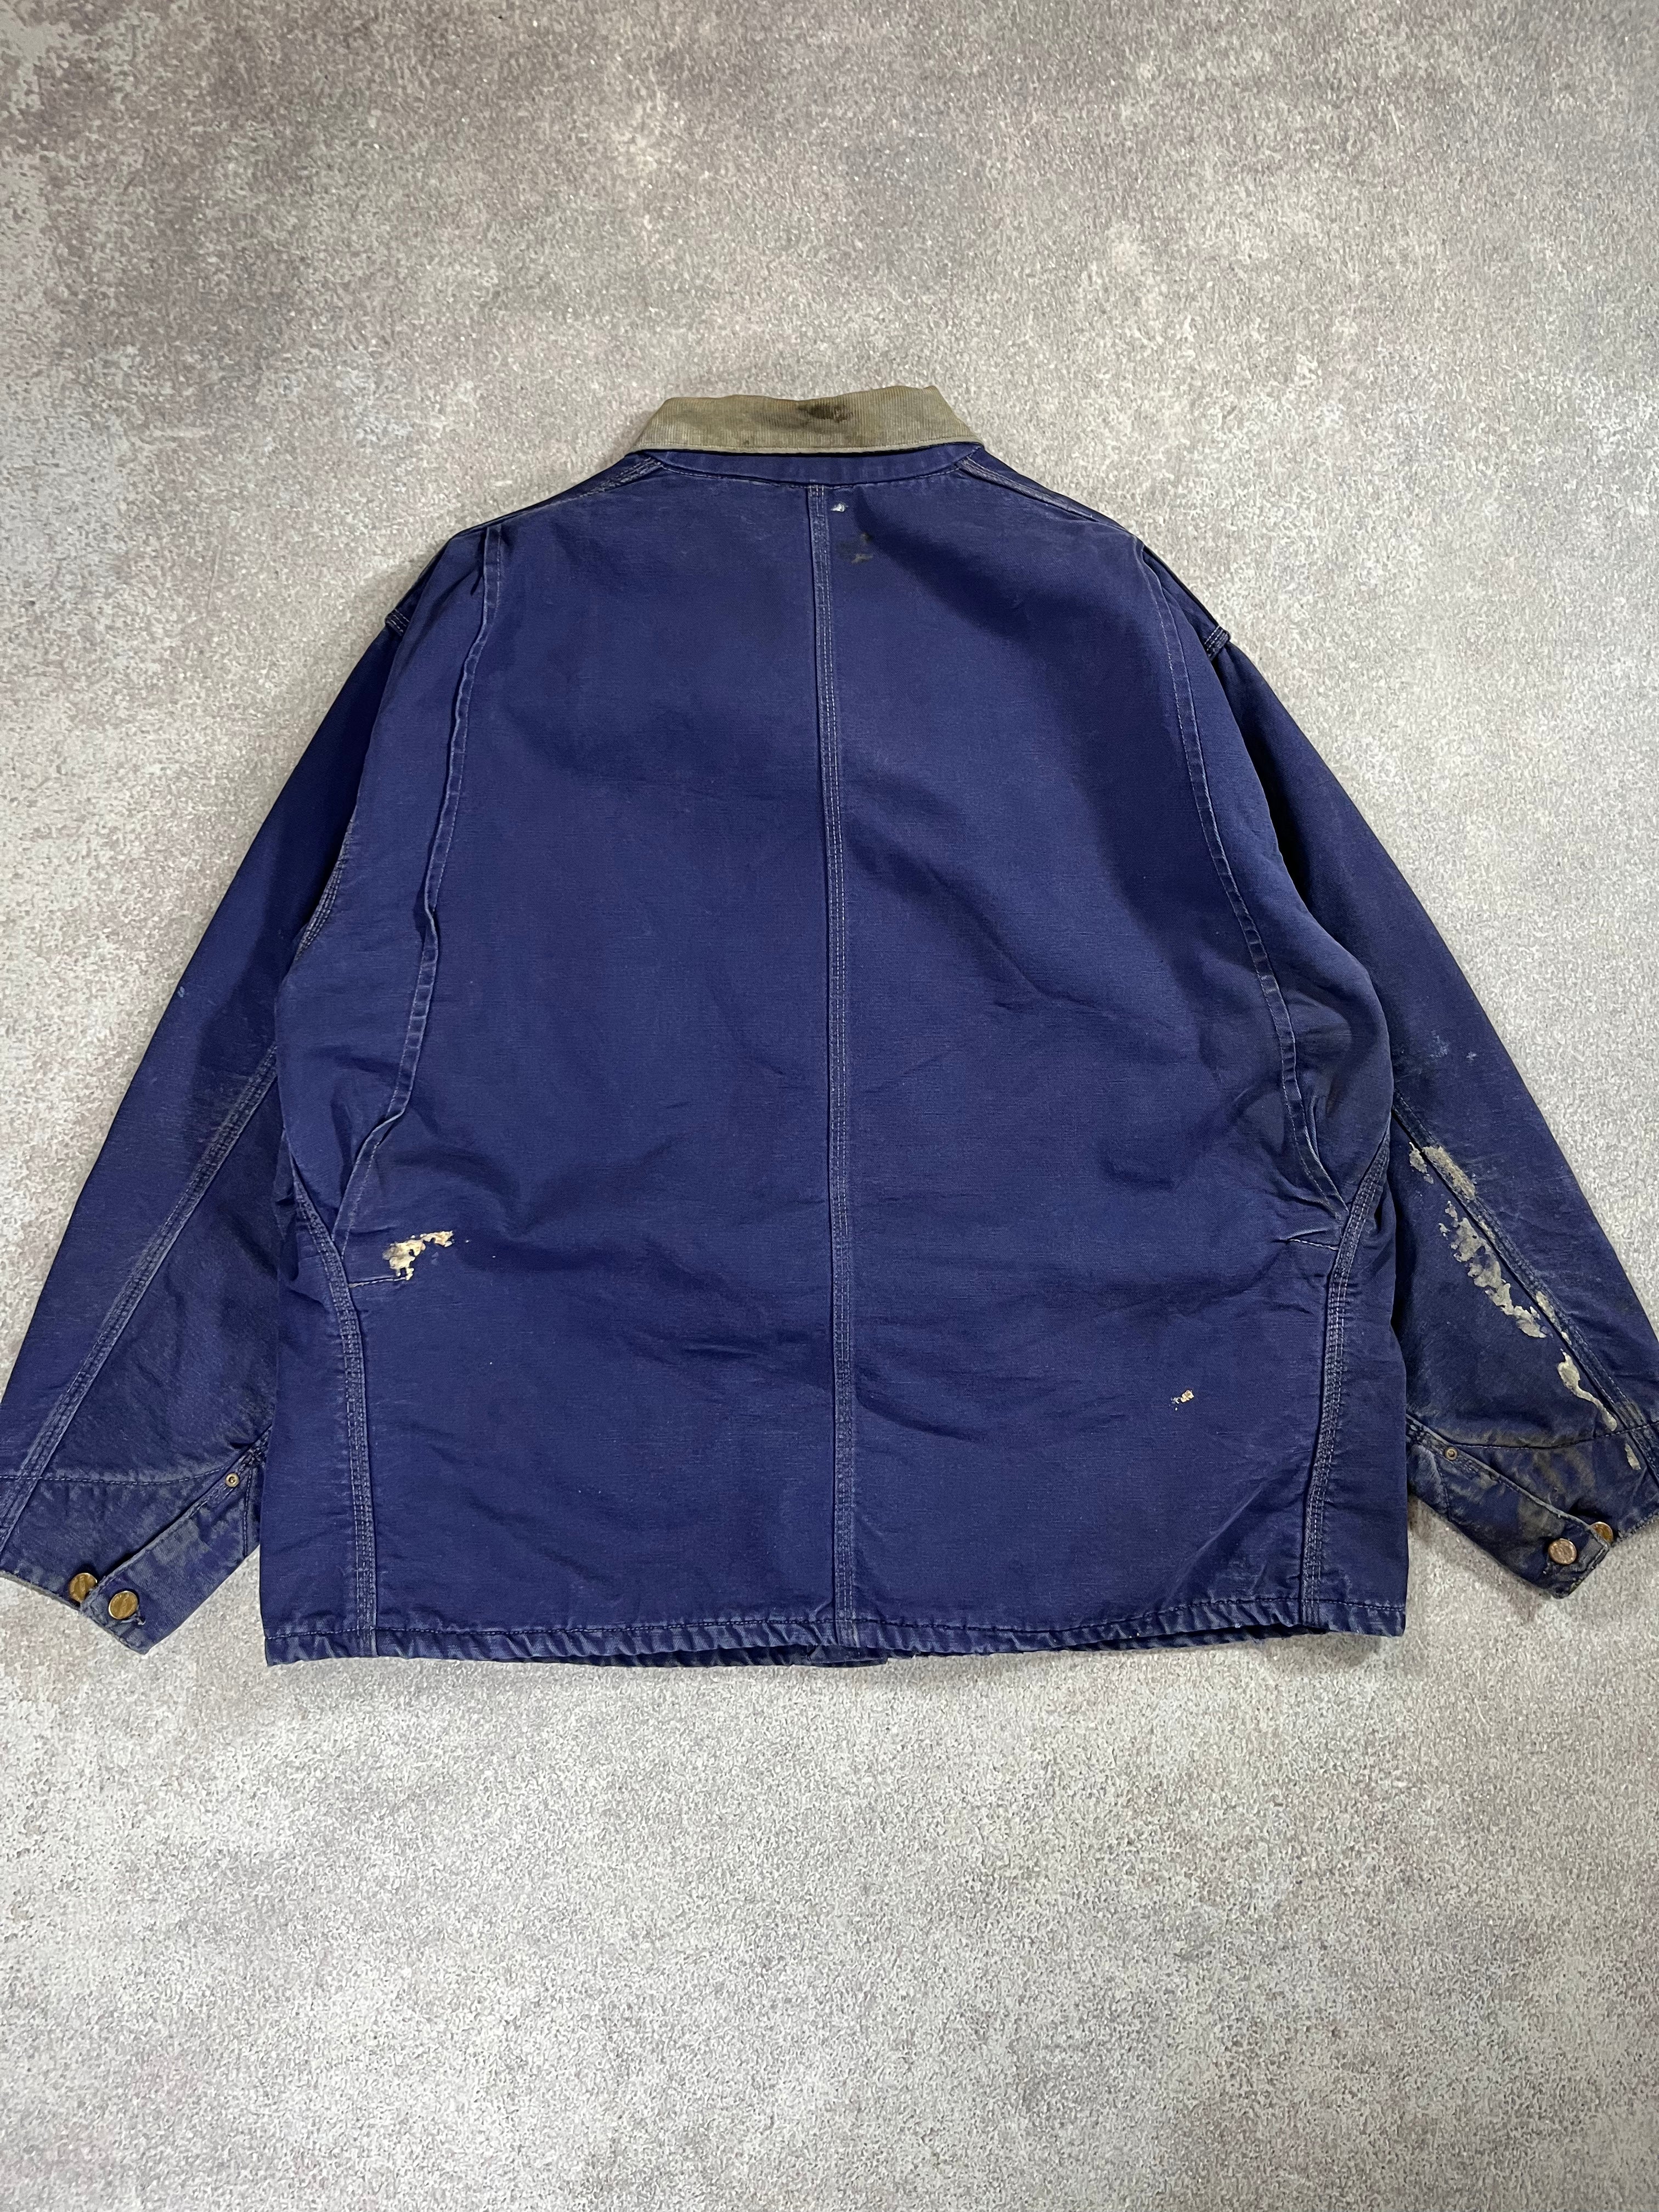 Carhartt Work Jacket Blue // X-Large - RHAGHOUSE VINTAGE